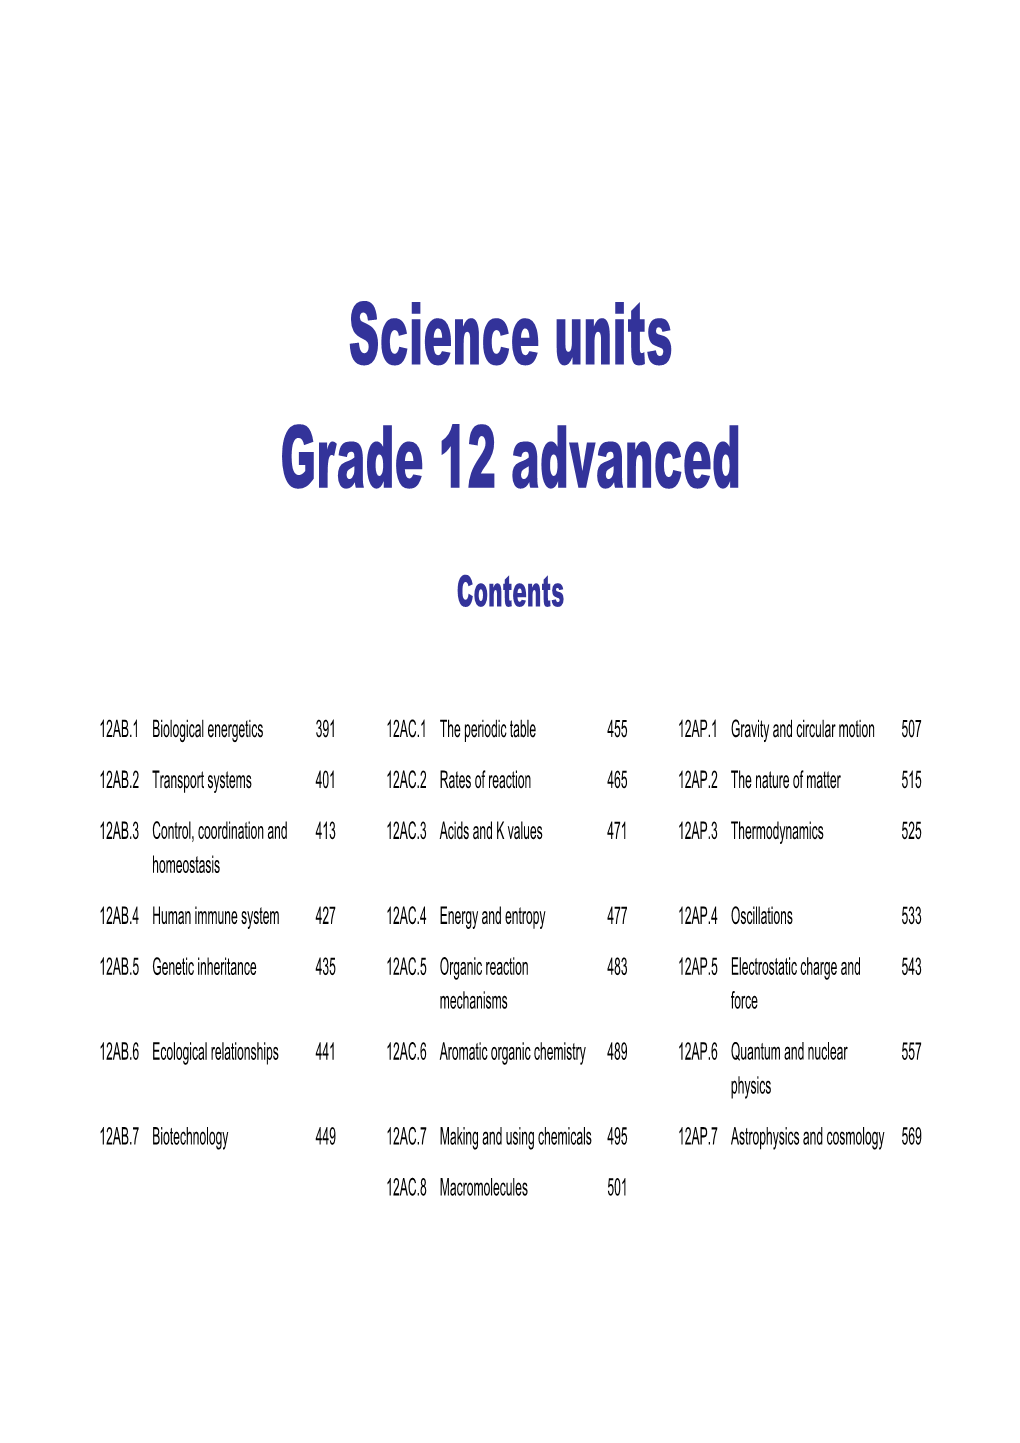 Science Units Grade 12 Advanced